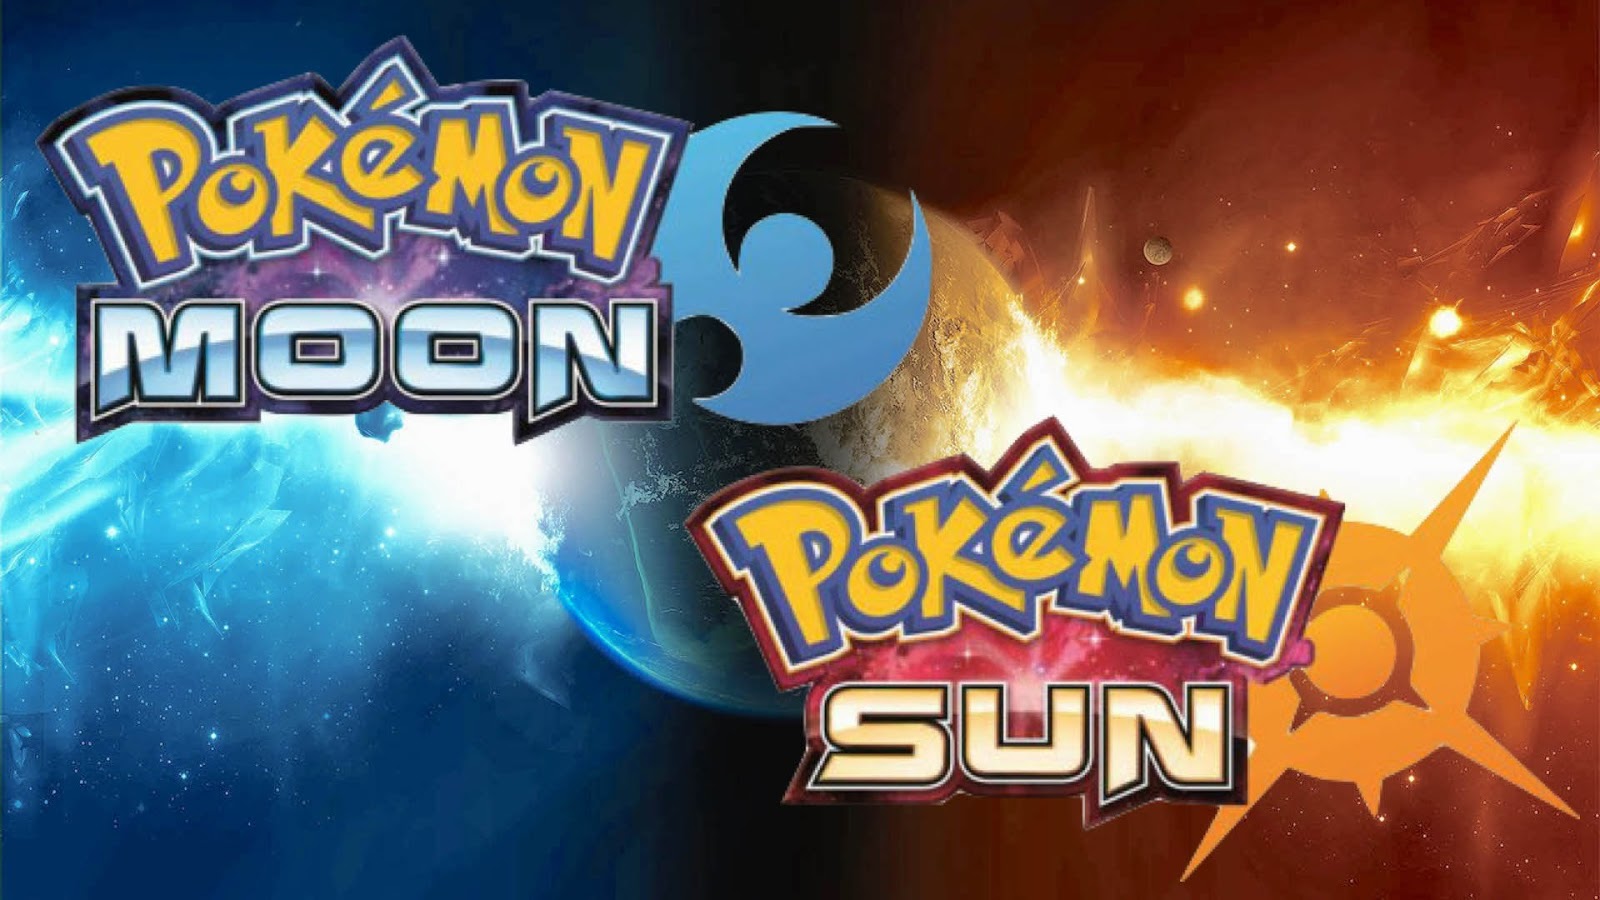 Folheto revela Pokémon exclusivos das versões Ultra Sun & Ultra Moon -  Pokémothim